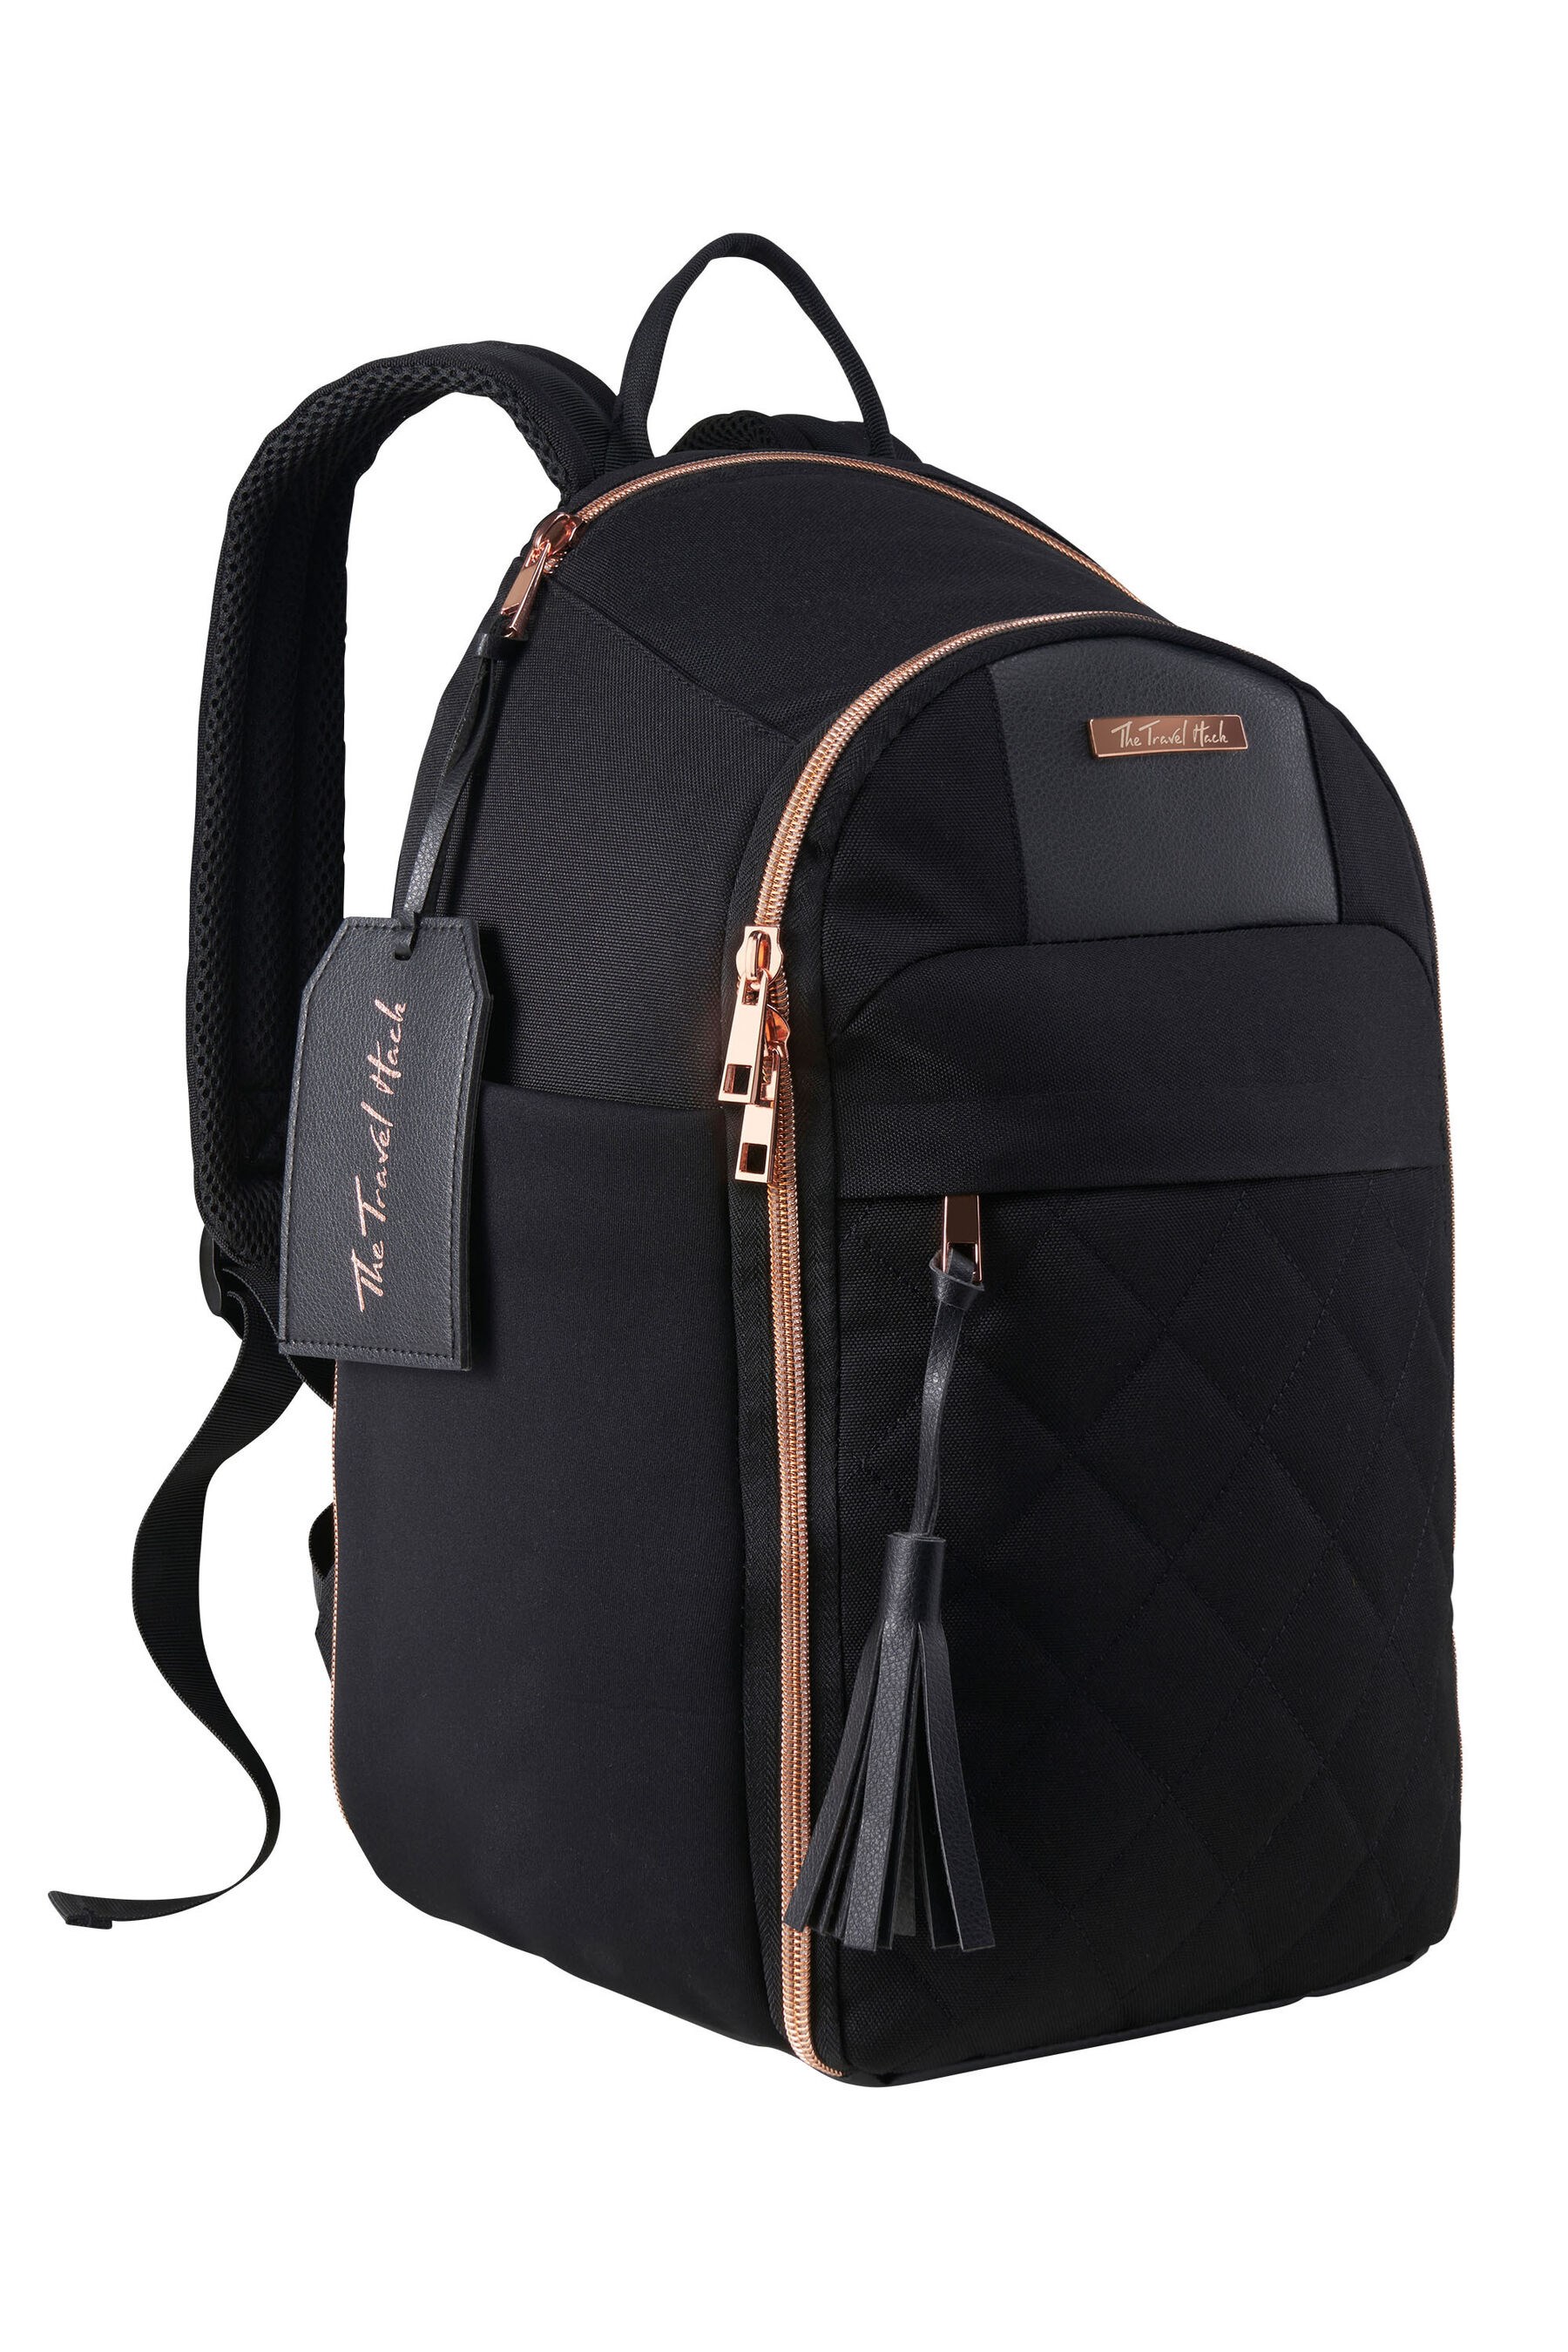 Travel Hack 20L Cabin Backpack 40x20x25cm -